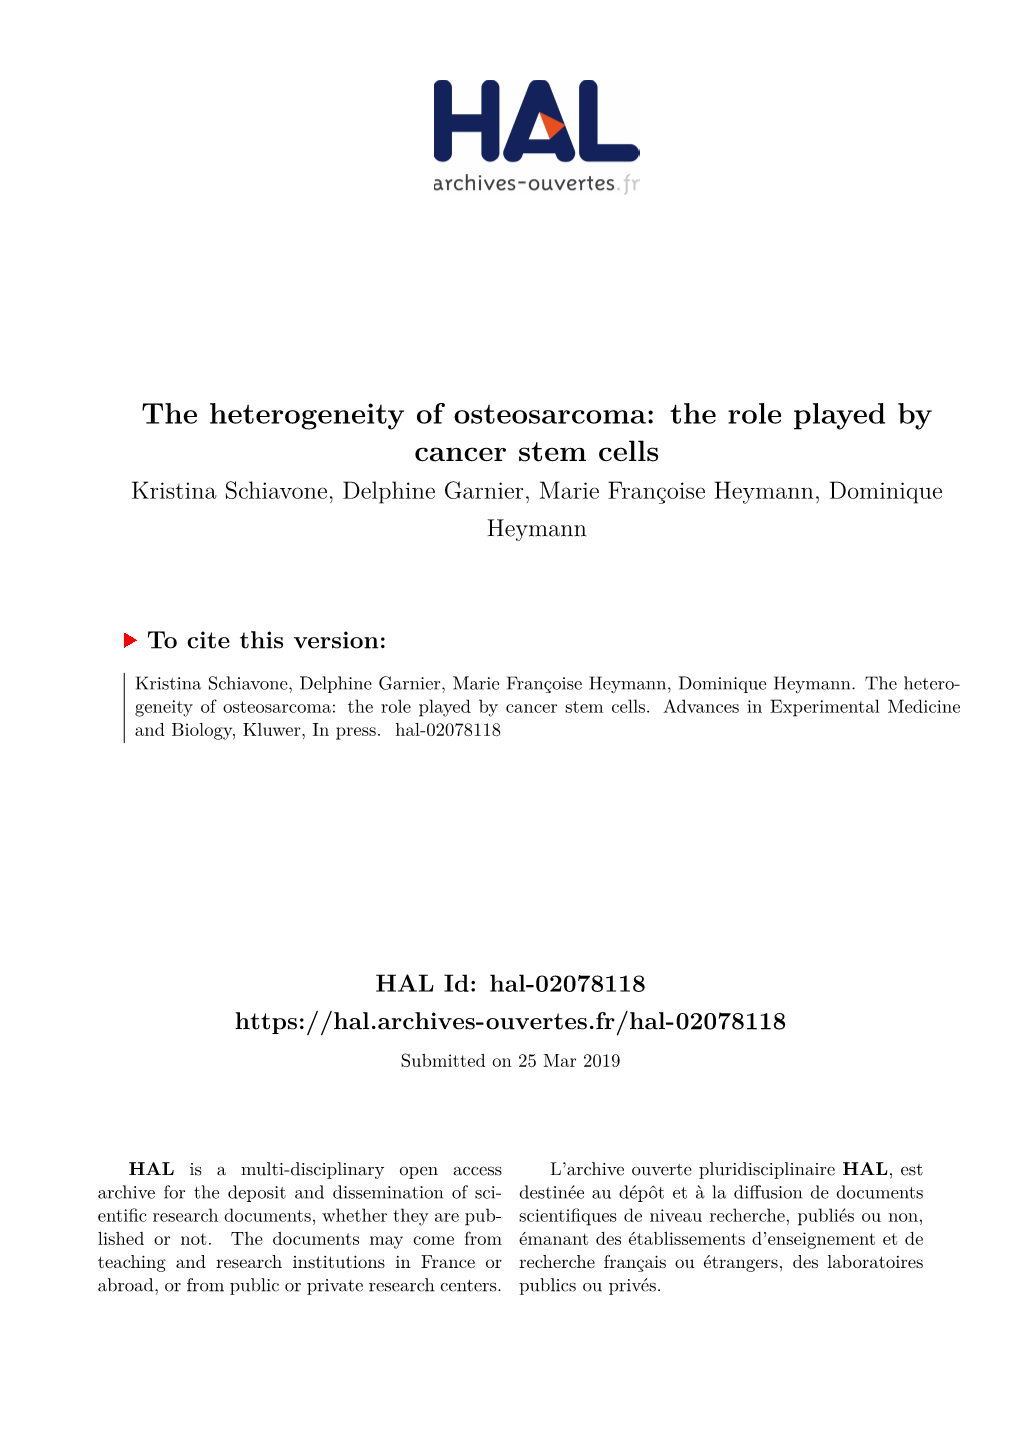 The Heterogeneity of Osteosarcoma: the Role Played by Cancer Stem Cells Kristina Schiavone, Delphine Garnier, Marie Françoise Heymann, Dominique Heymann